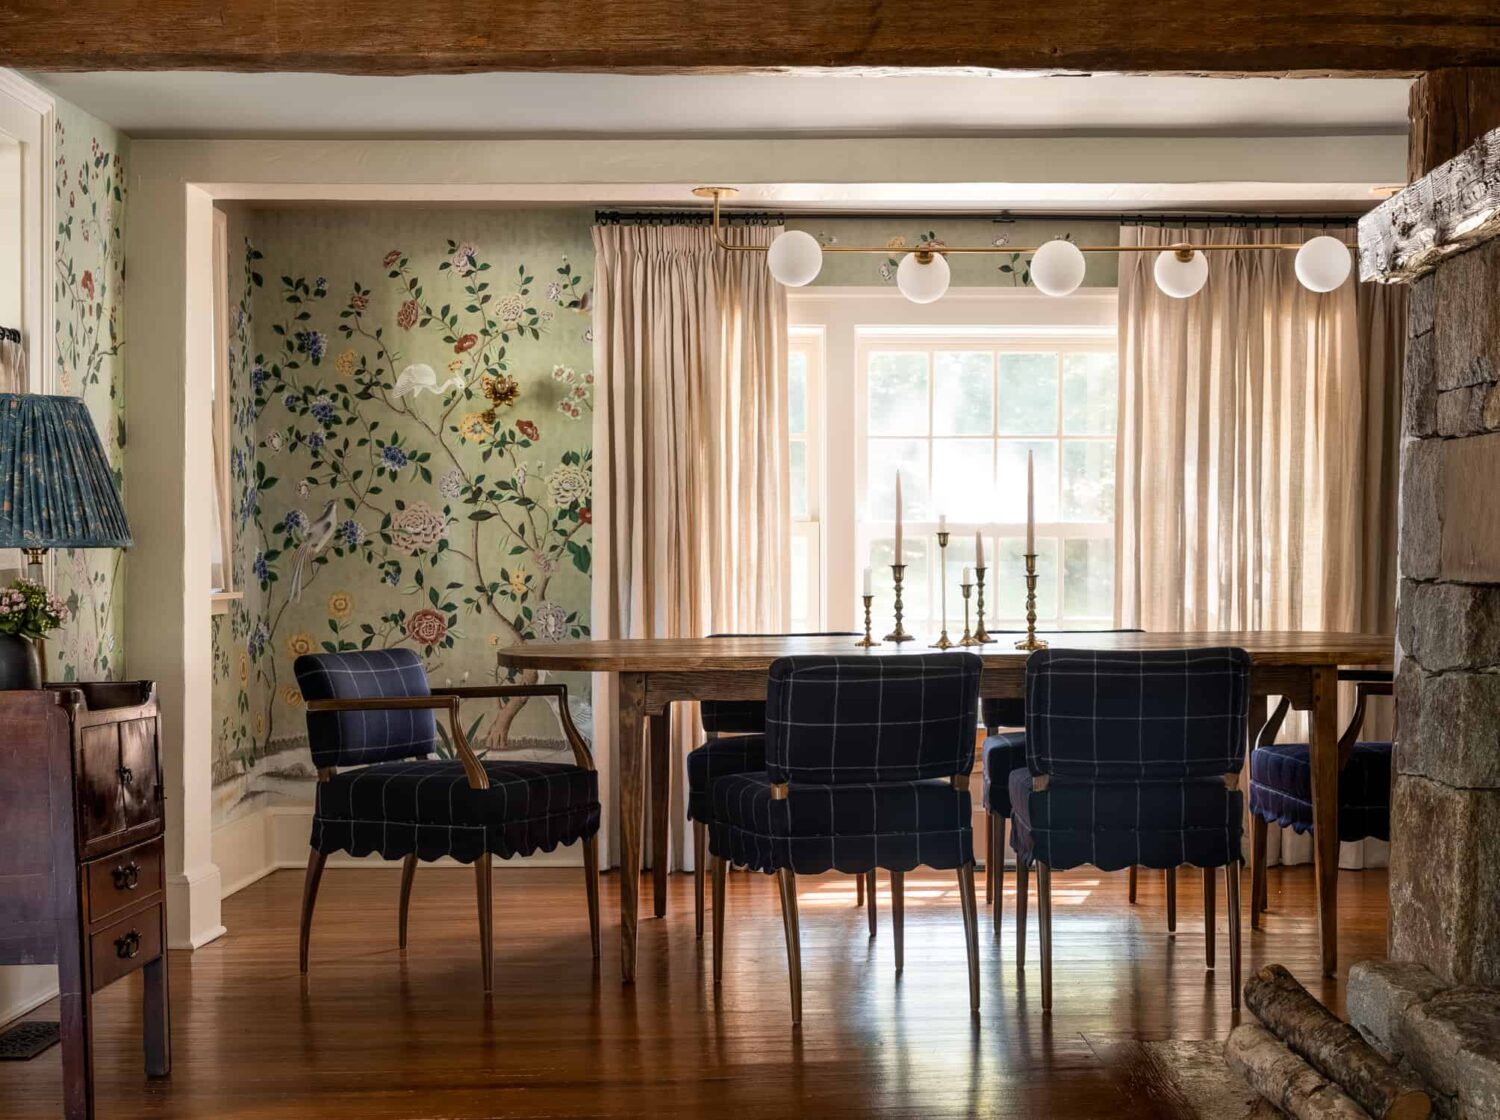 Heidi-Caillier-Design-Hudson-Valley-house-dining-room-old-beams-degournay-wallpaper-modern-lighting-Nordroom